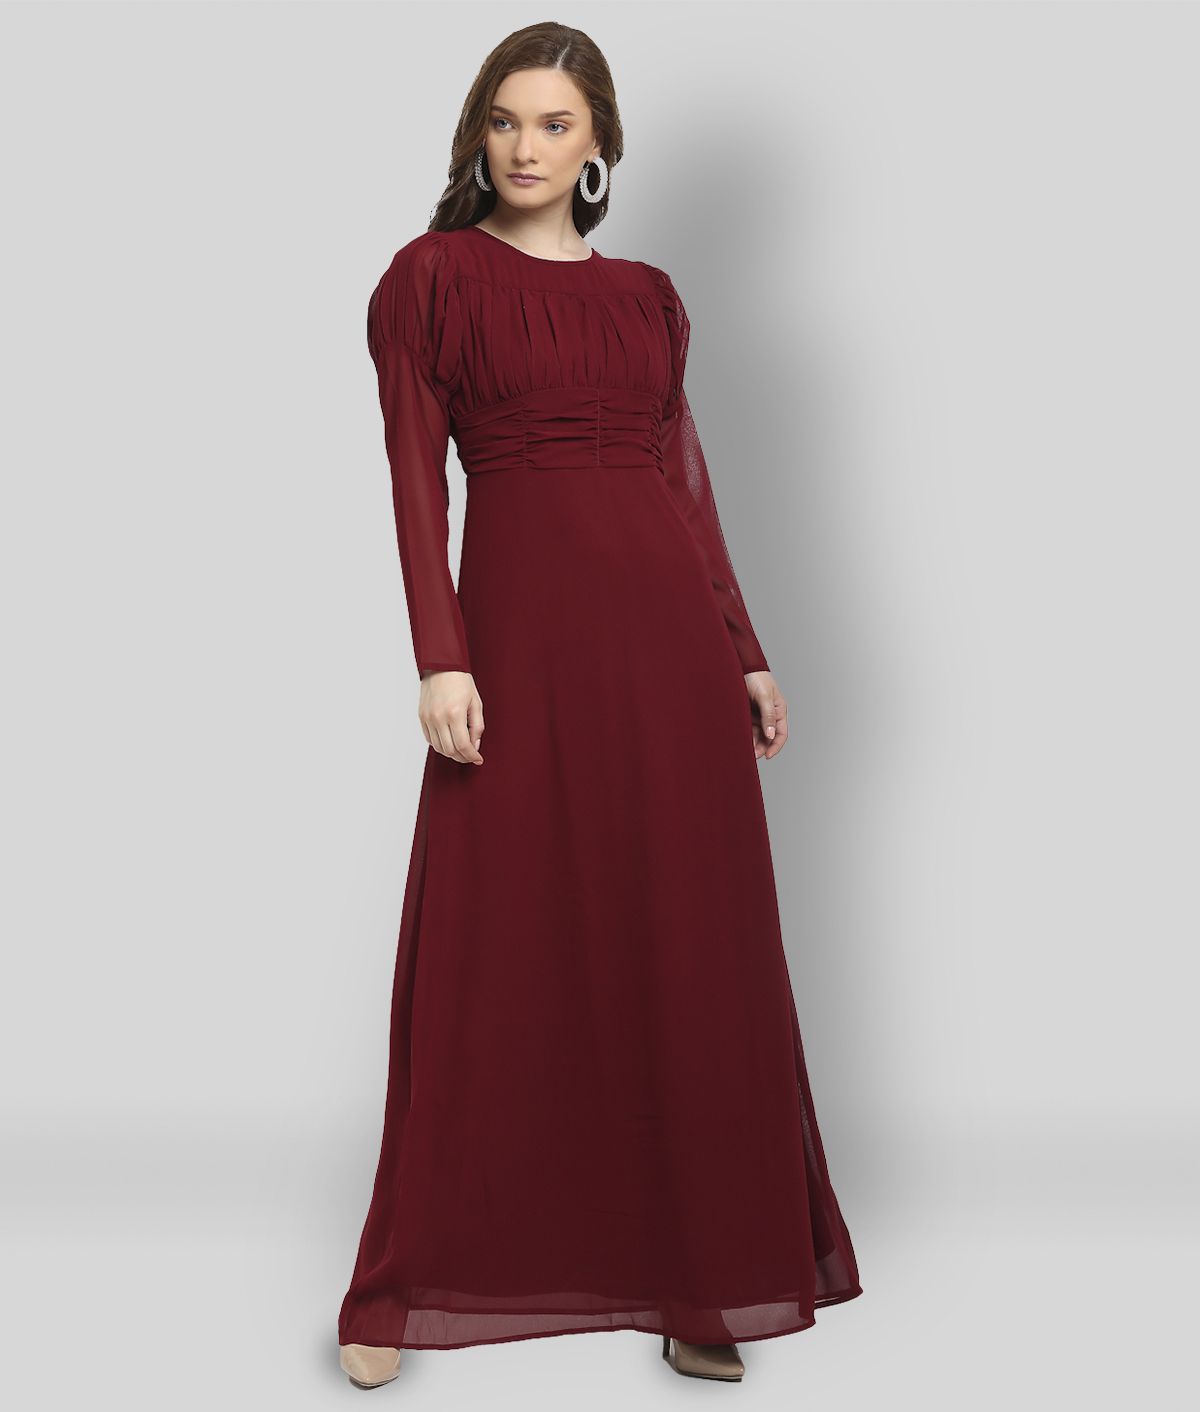 La Zoire - Maroon Cotton Blend Women's A- line Dress ( Pack of 1 )